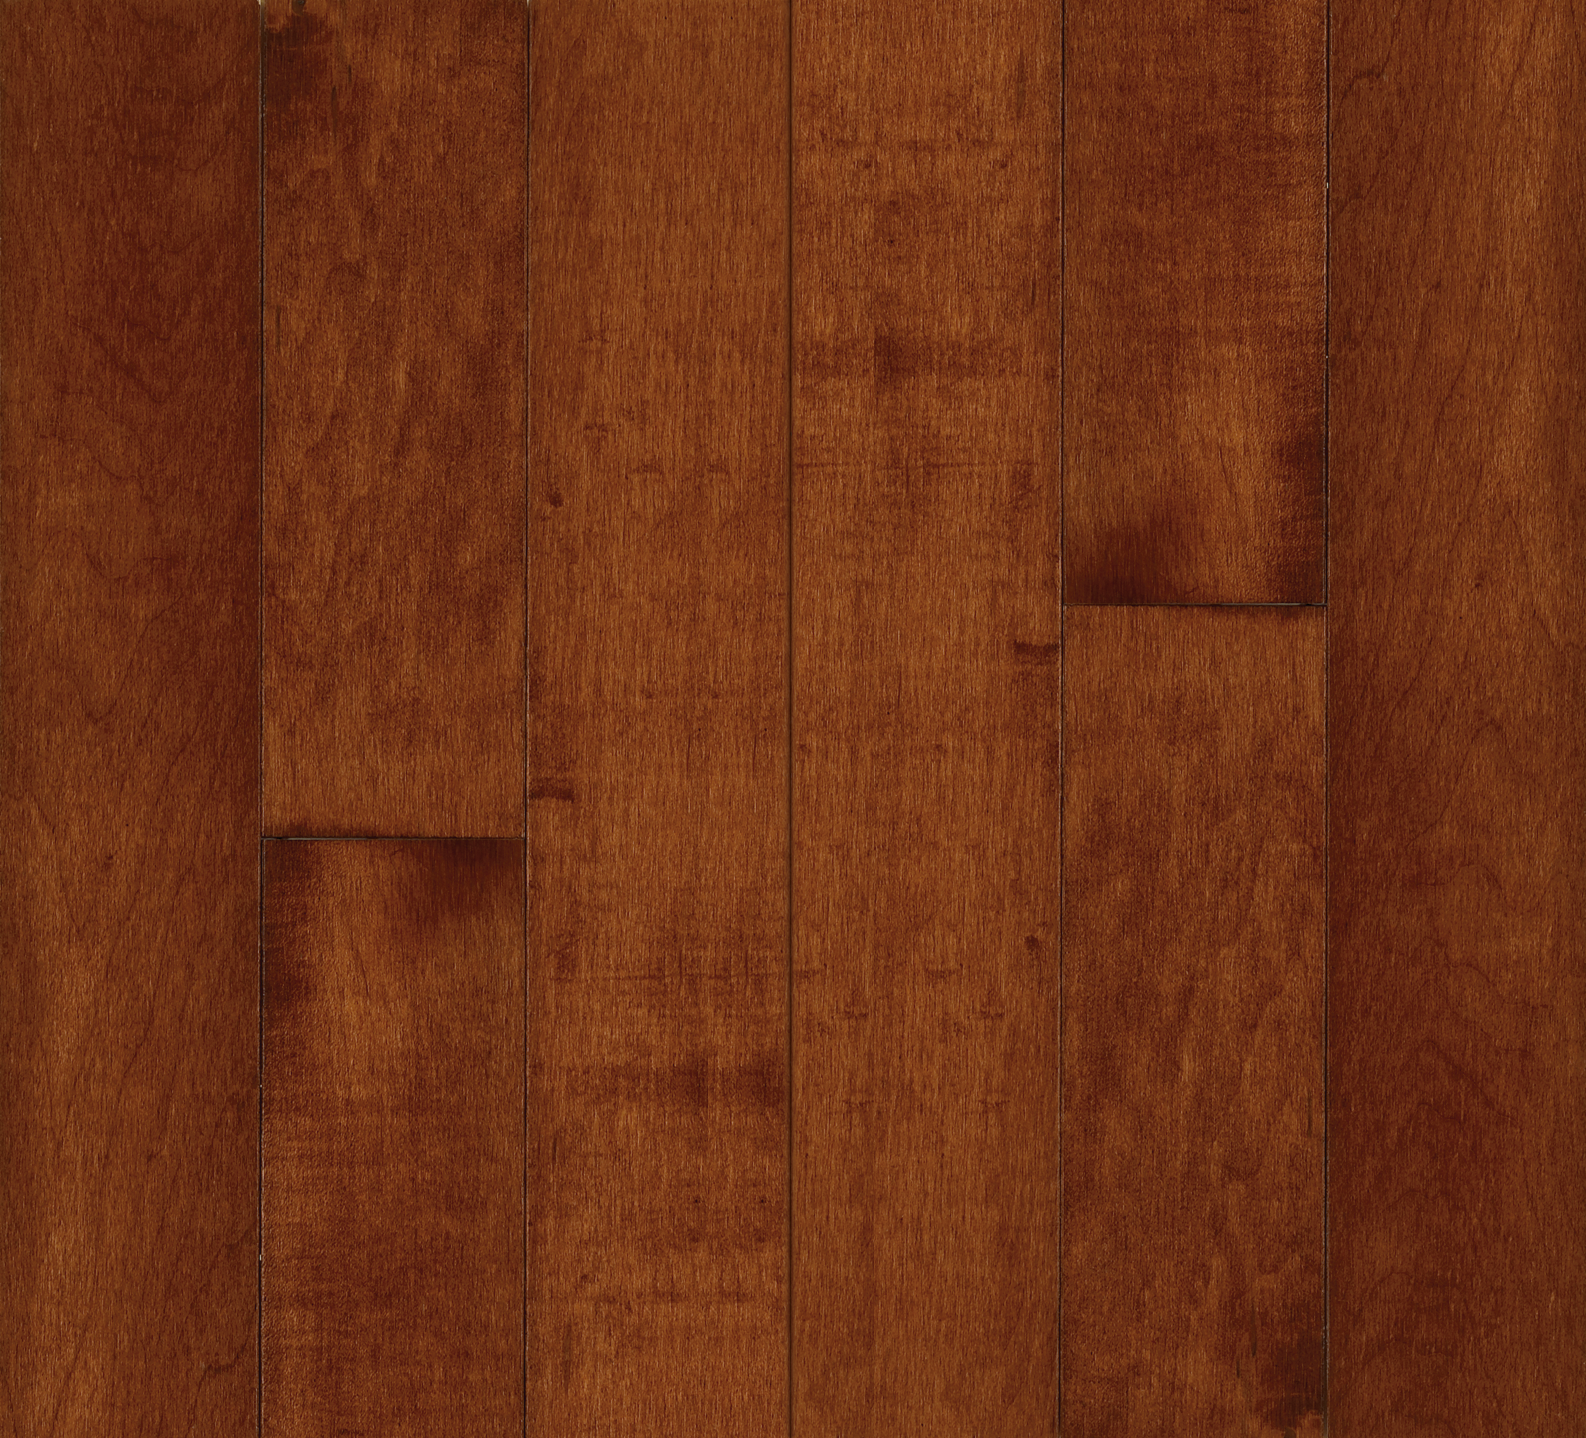 Cherry 5 In Maple Solid Hardwood Cm5728, Maple Solid Hardwood Flooring